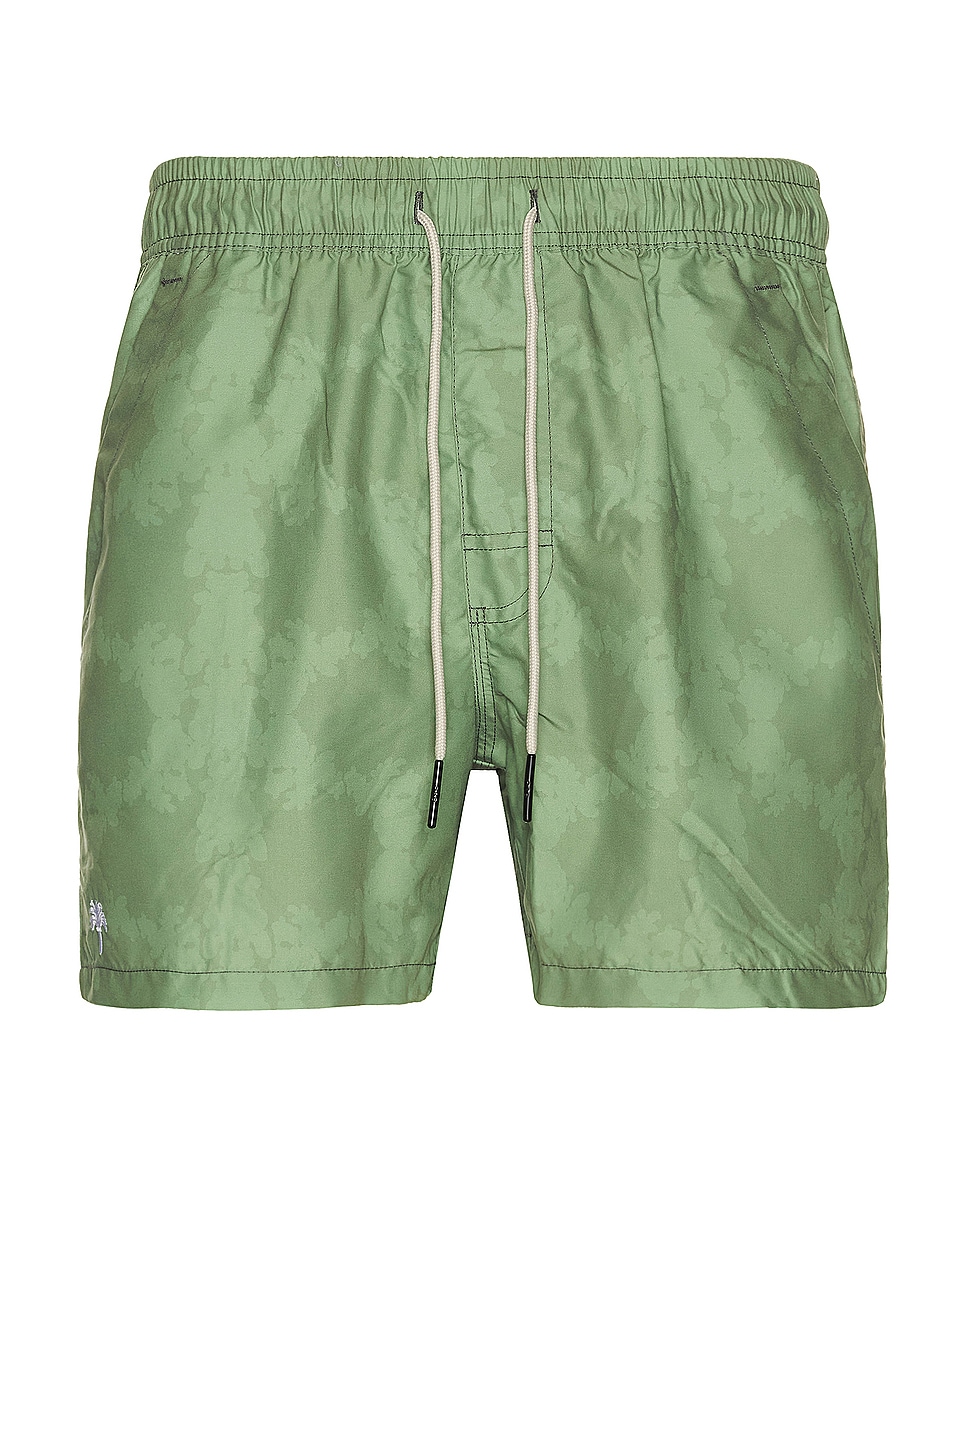 Oas Blurry Crown Swim Shorts In Green